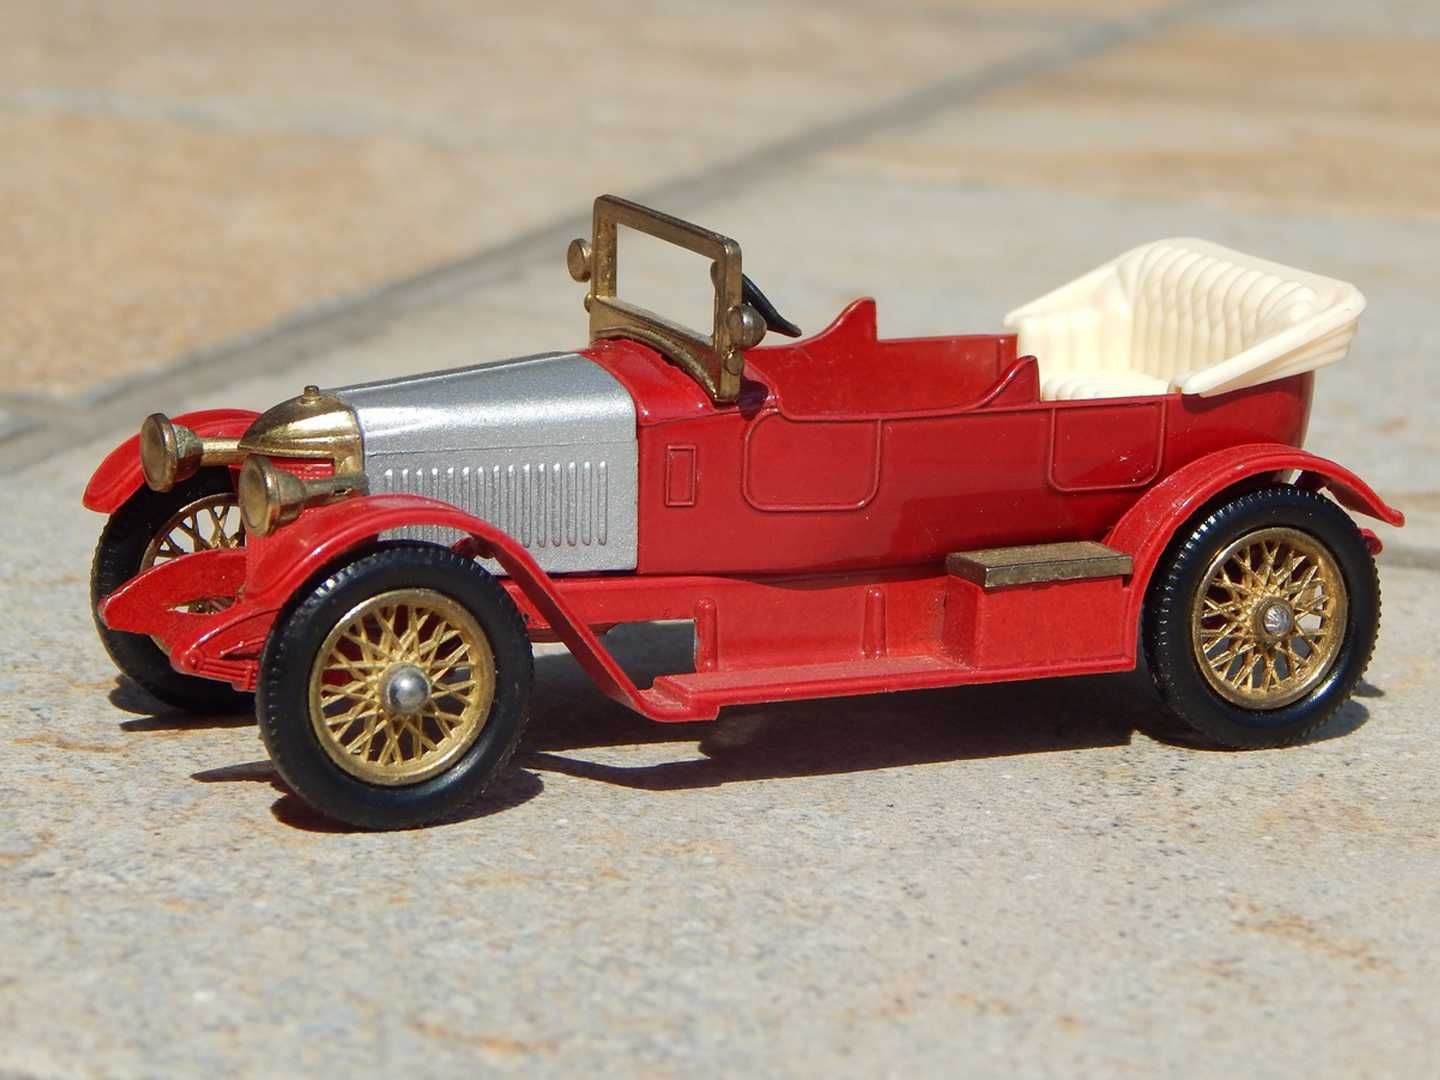 Macheta veche auto epoca Prince Henry Vauxhall 1914 1:43 Matchbox